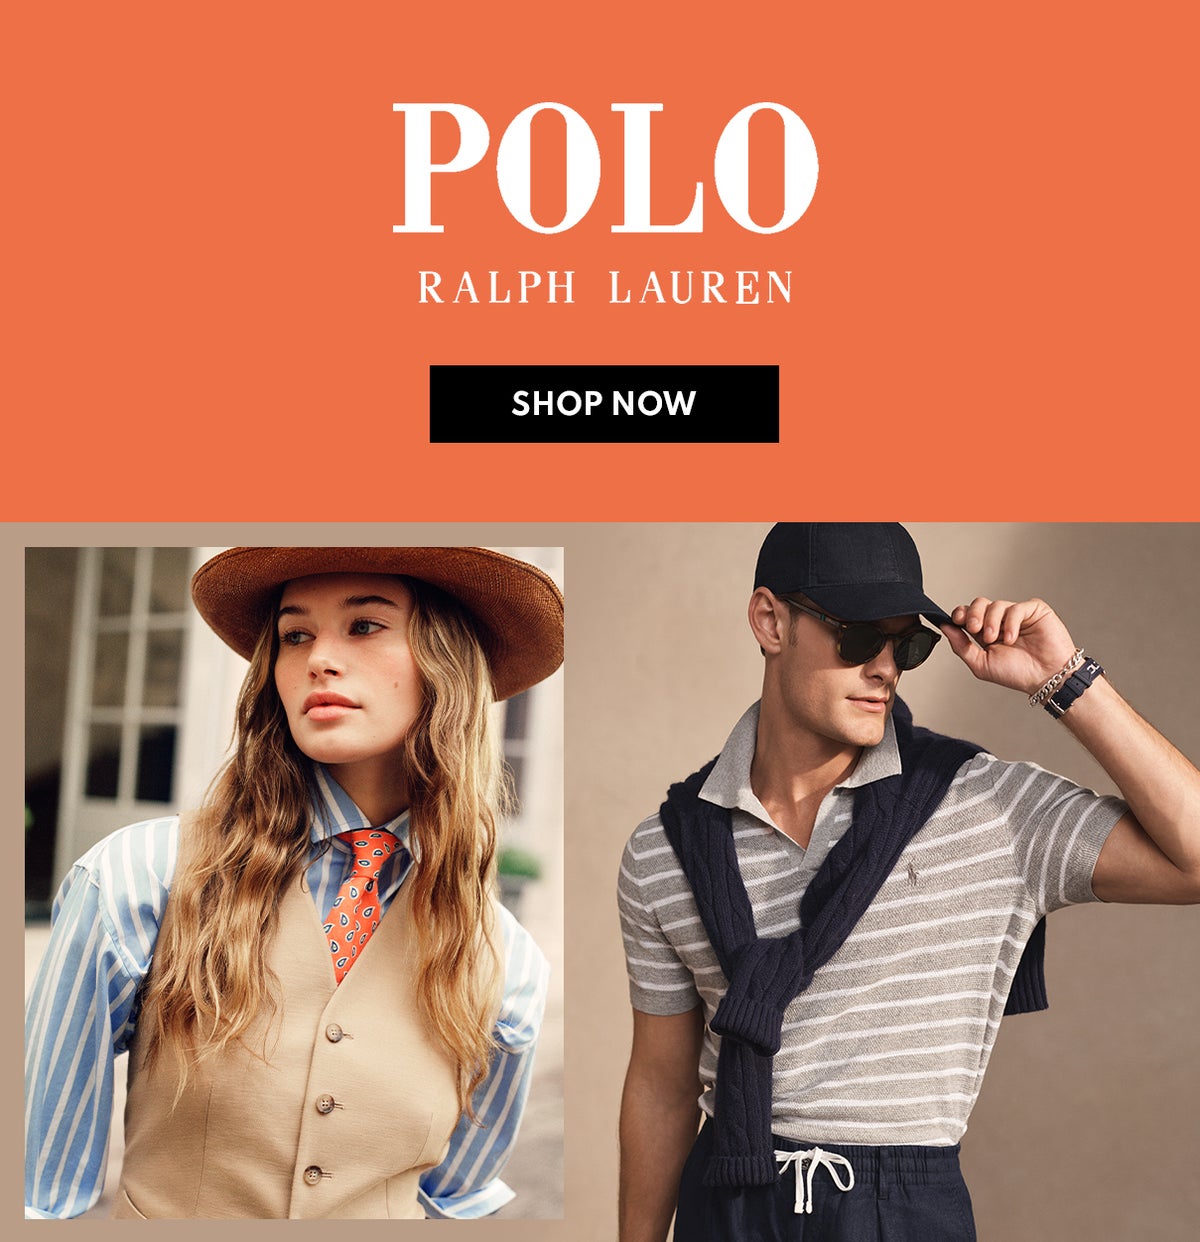 Polo Ralph Lauren Shop Now